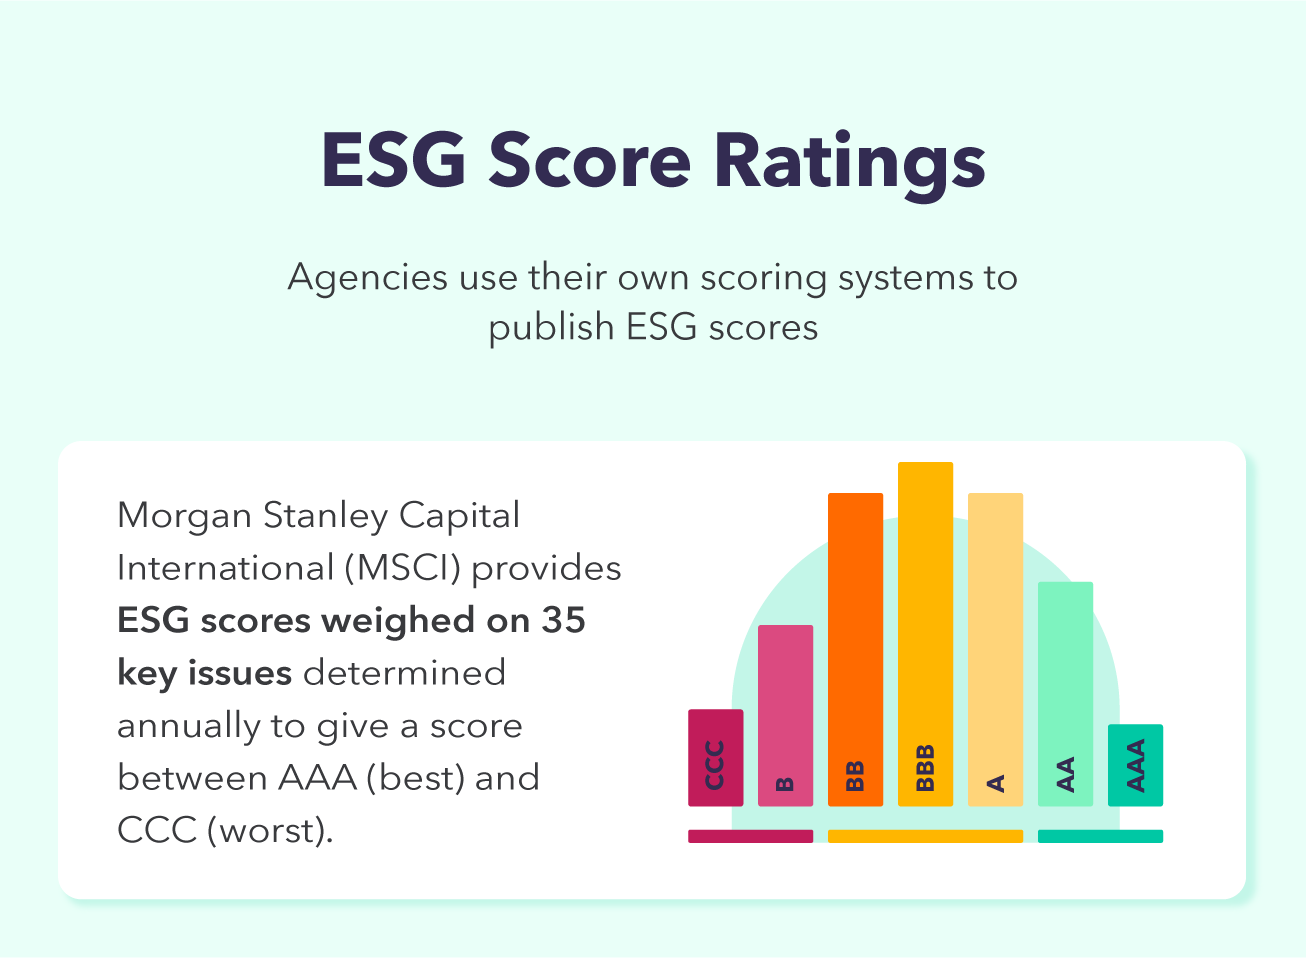 Agencies use their own scoring systems to publish ESG scores. 